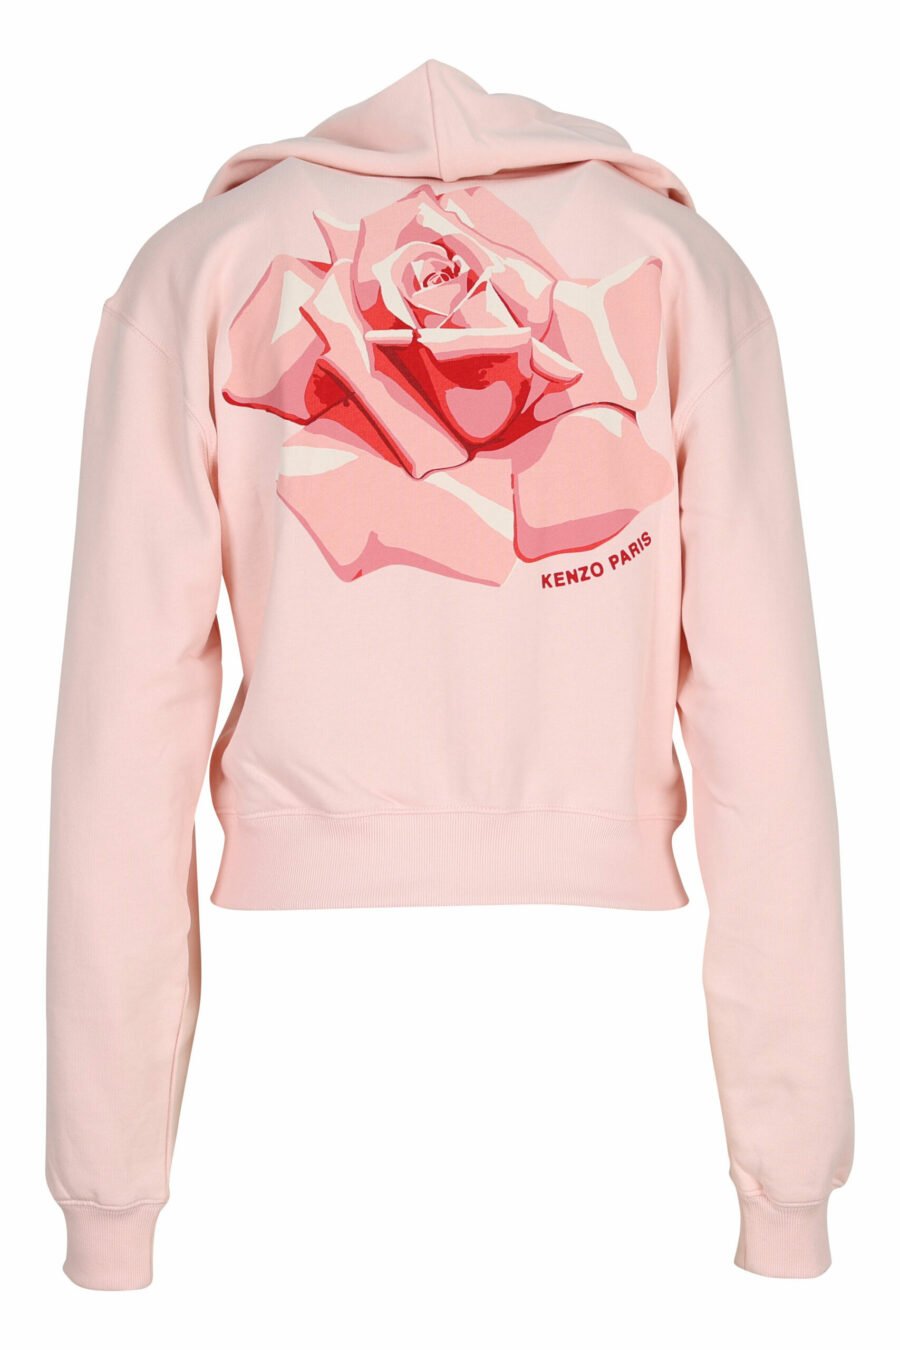 Rosa Kapuzen-Sweatshirt mit Kapuze und Mini-Logo "kenzo rose" - 3612230583009 1 skaliert